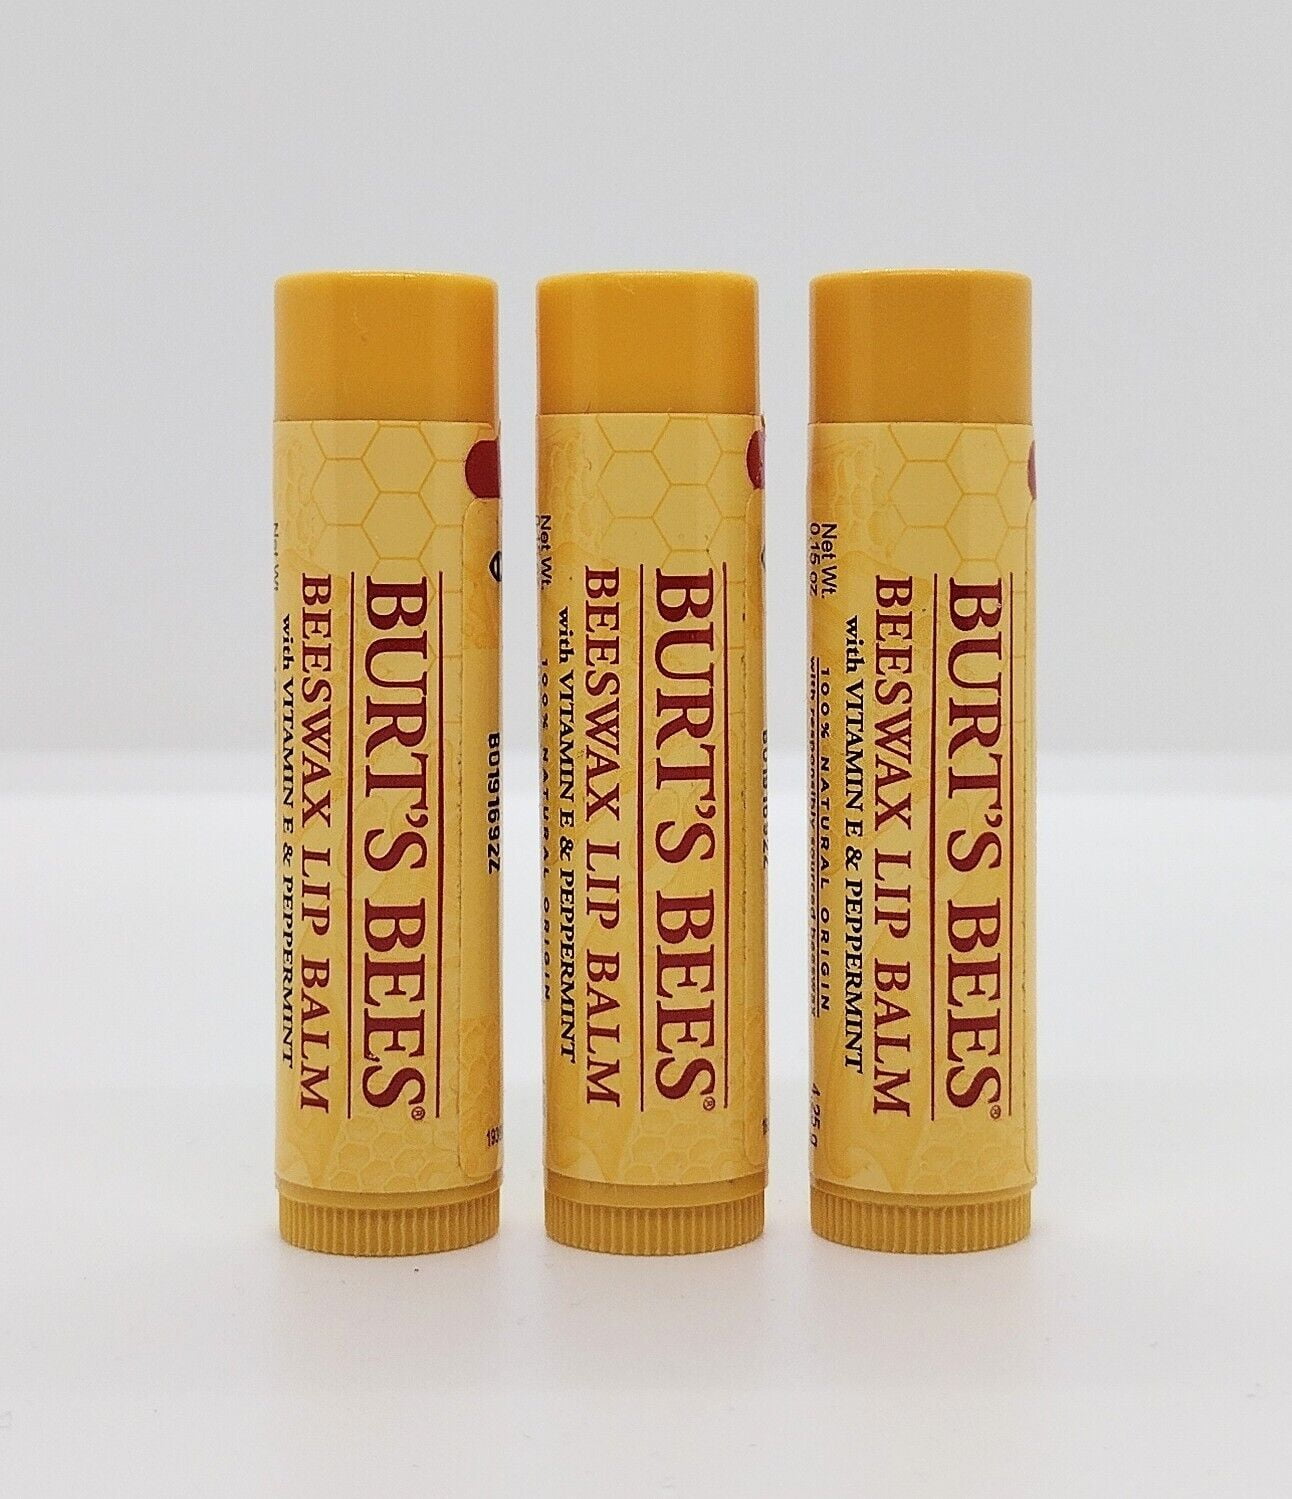 Burt's Bees Beeswax Lip Balm - 2ct/0.15oz : Target